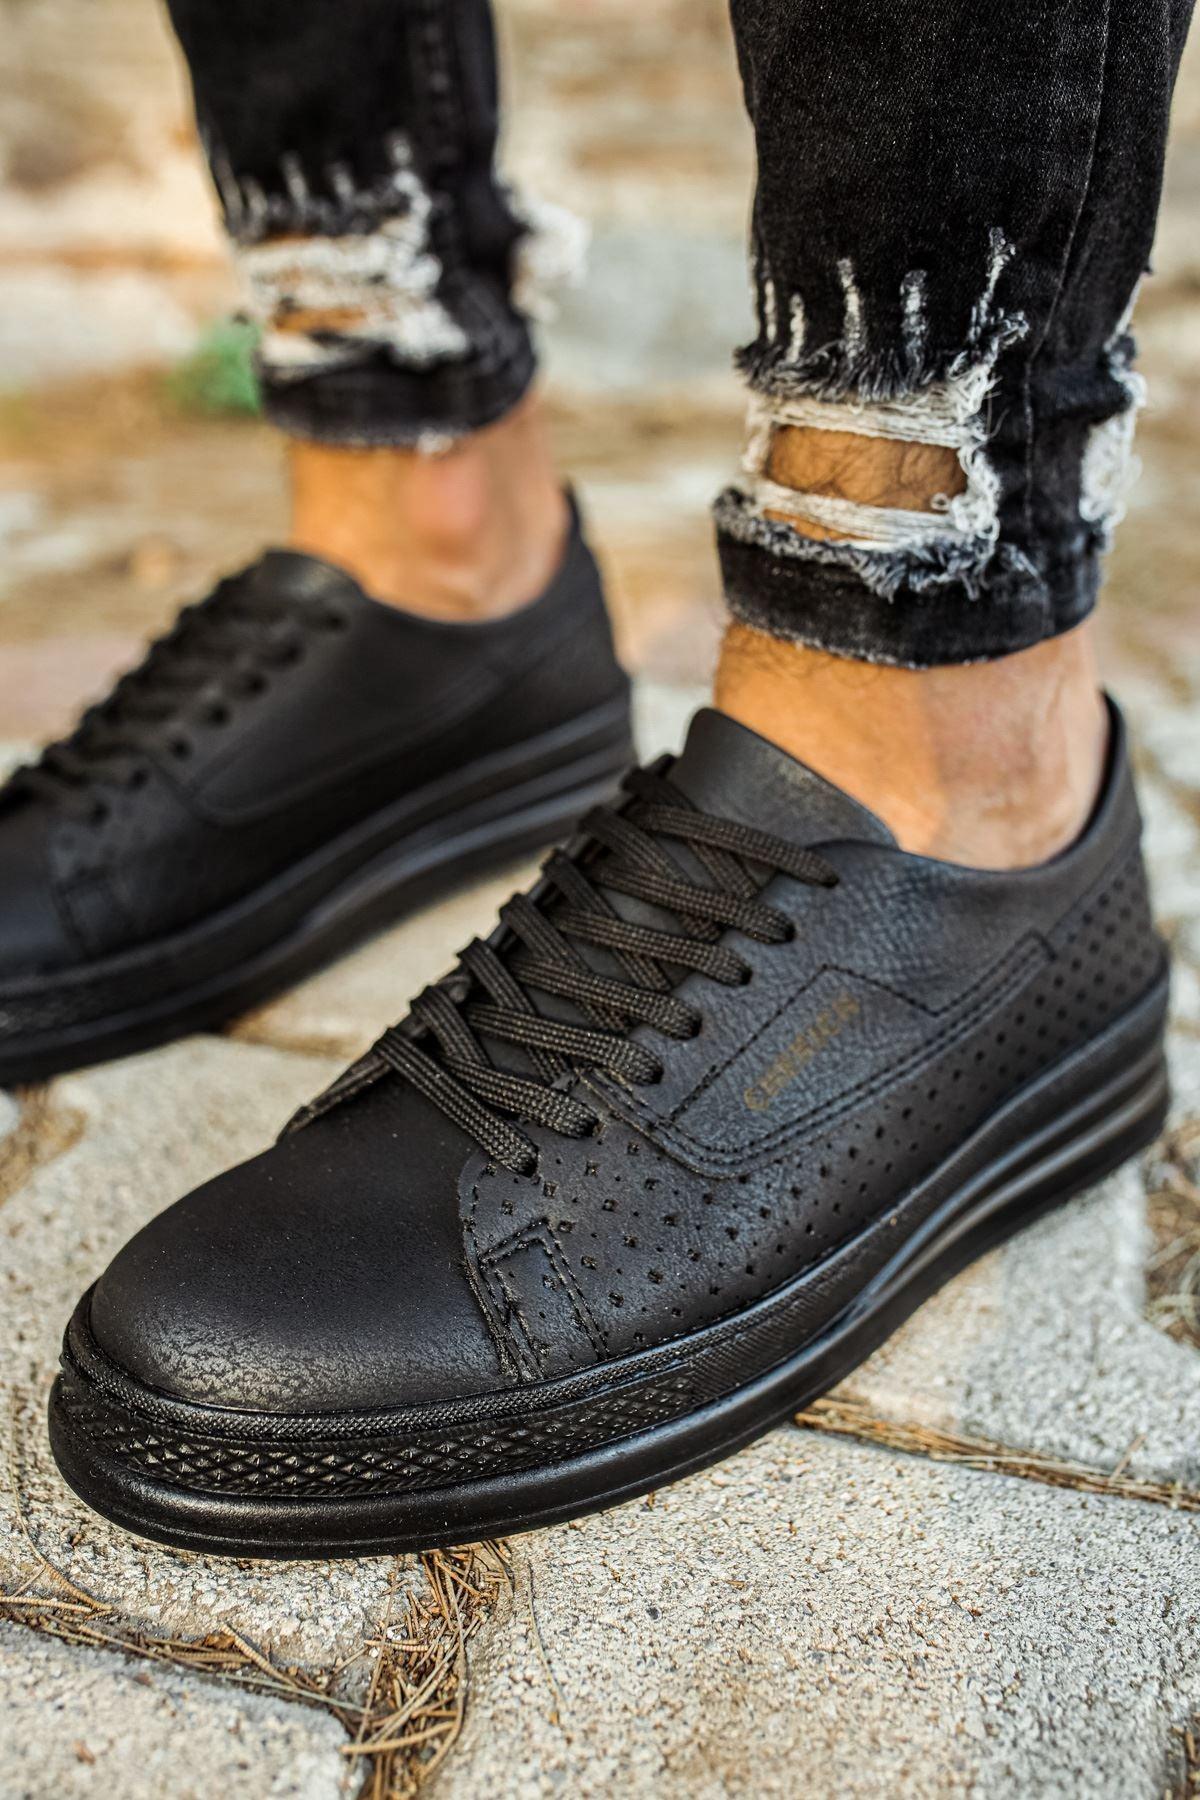 CH043 Men's Unisex Full Black Casual Shoes - STREET MODE ™